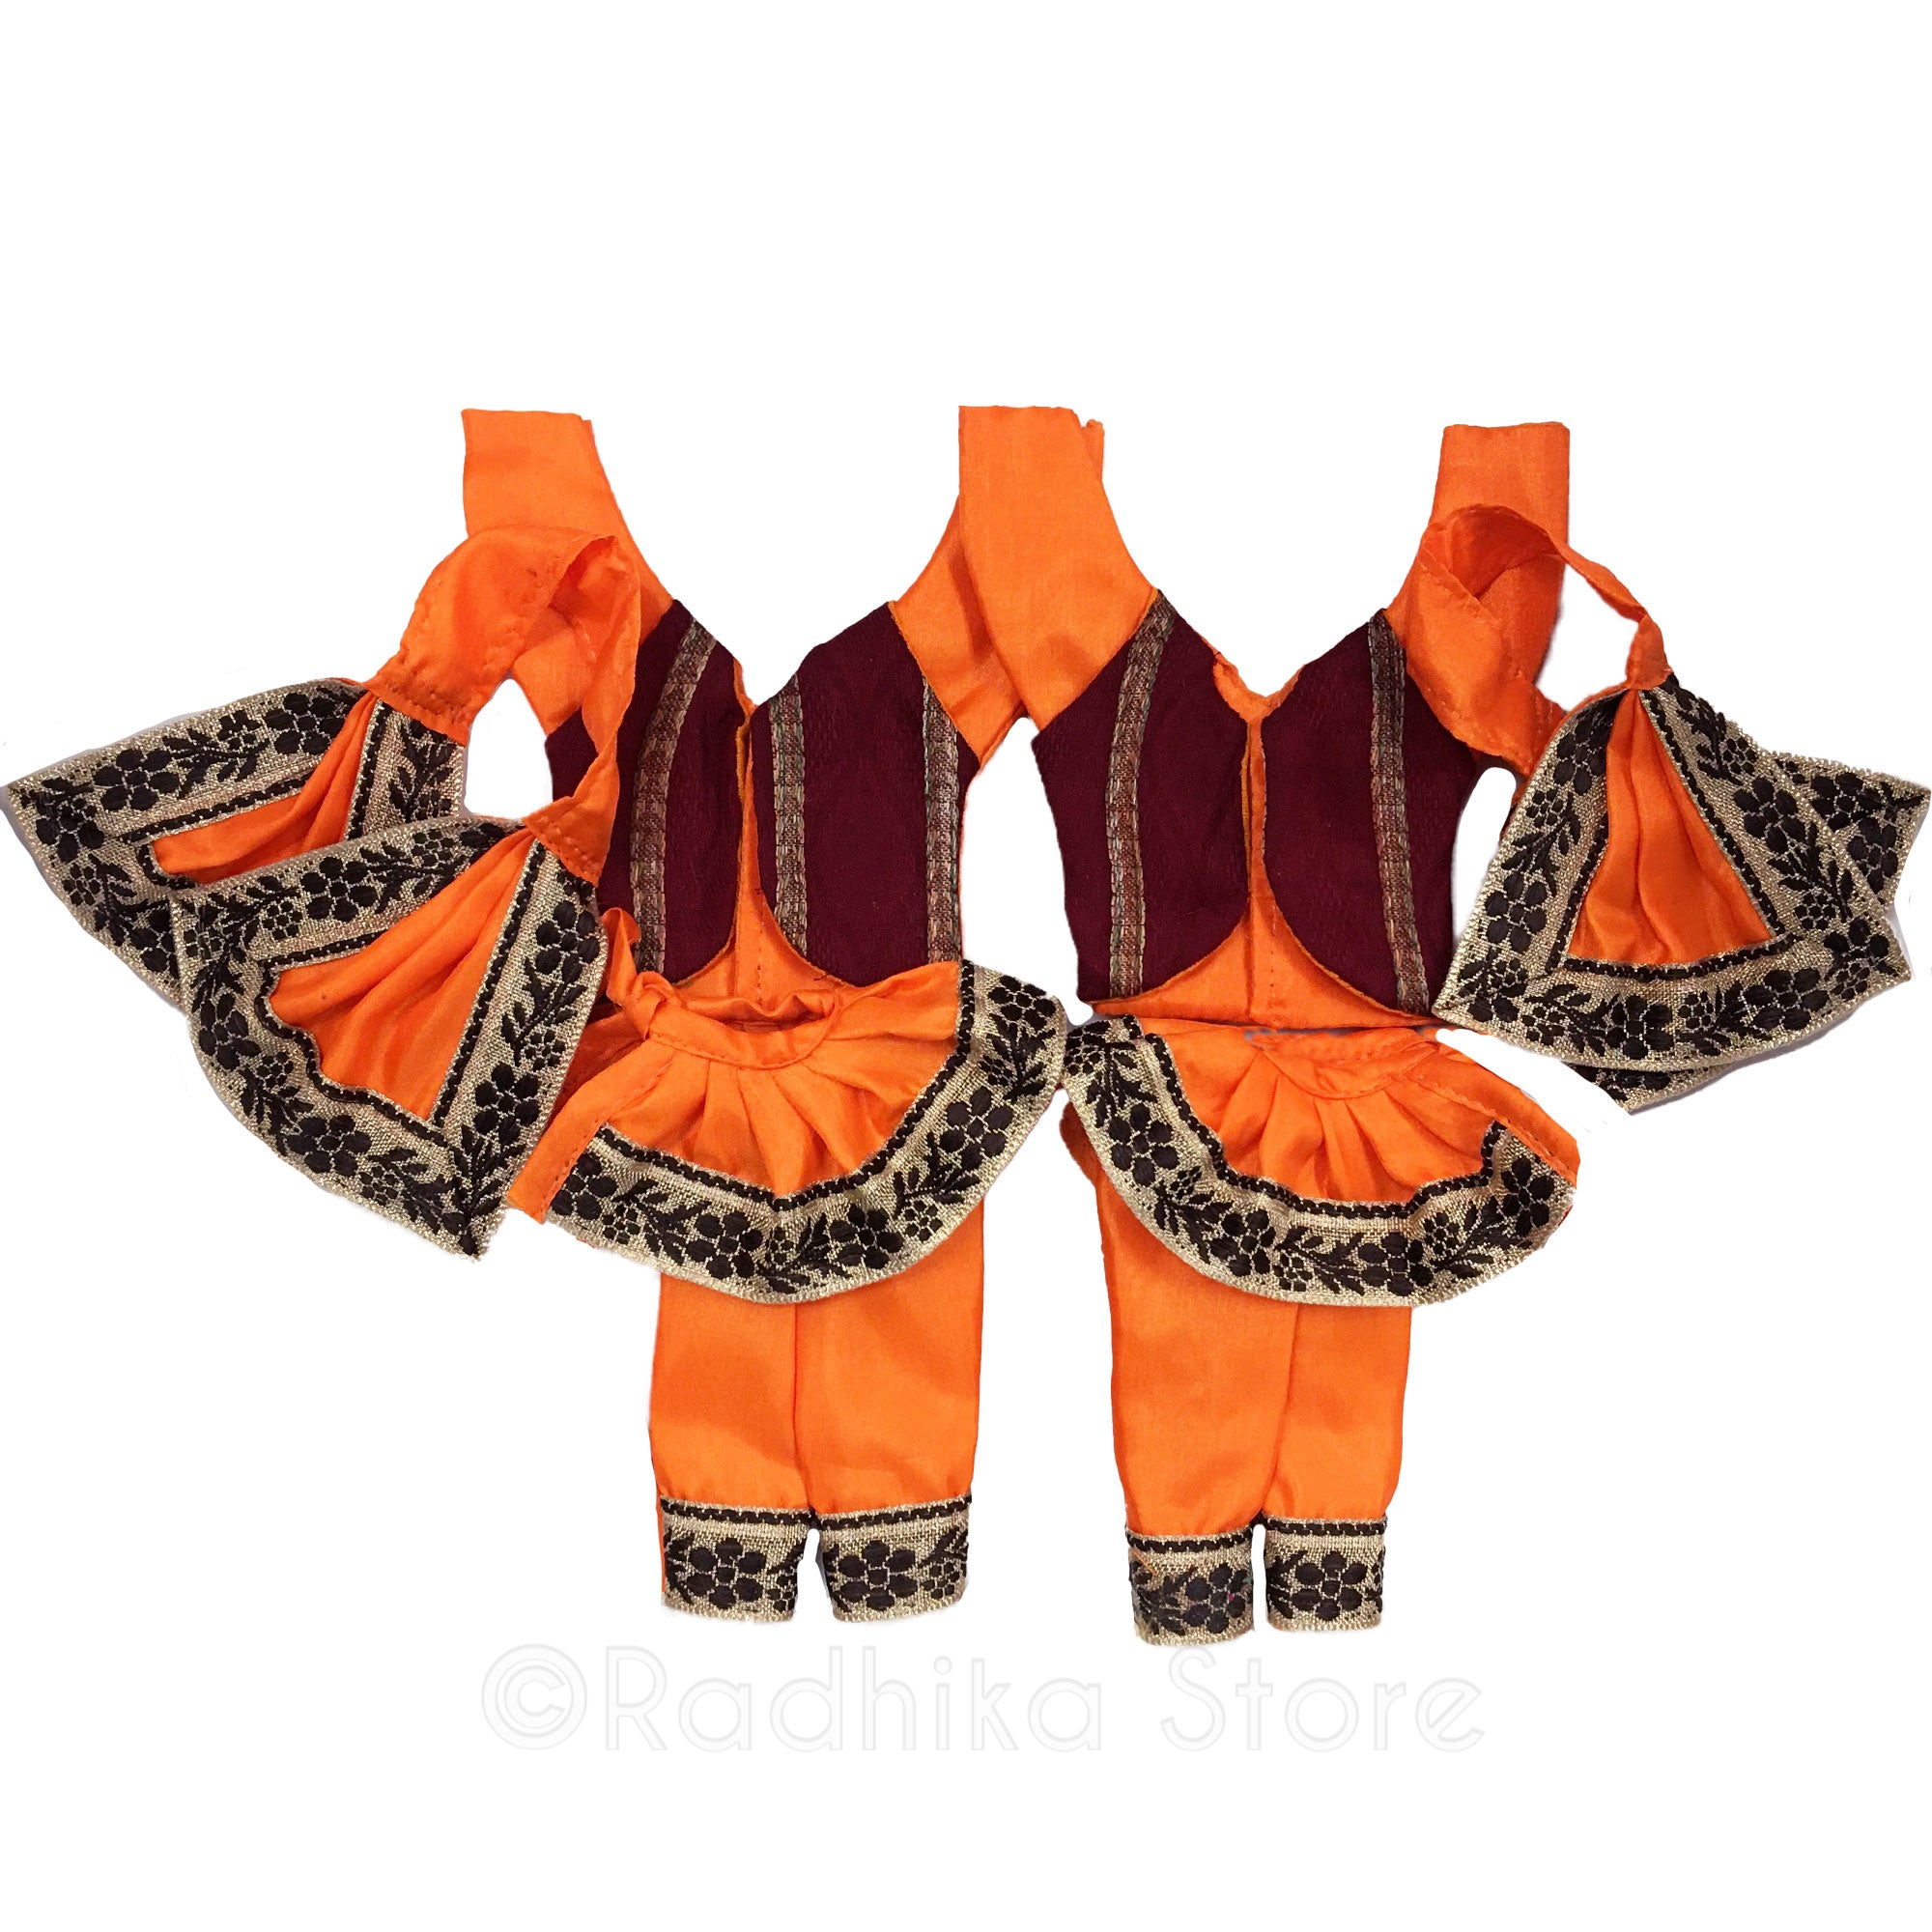 Govardhana Puja - Braja Style - Earth Colors - Gaura Nitai Deity Outfit